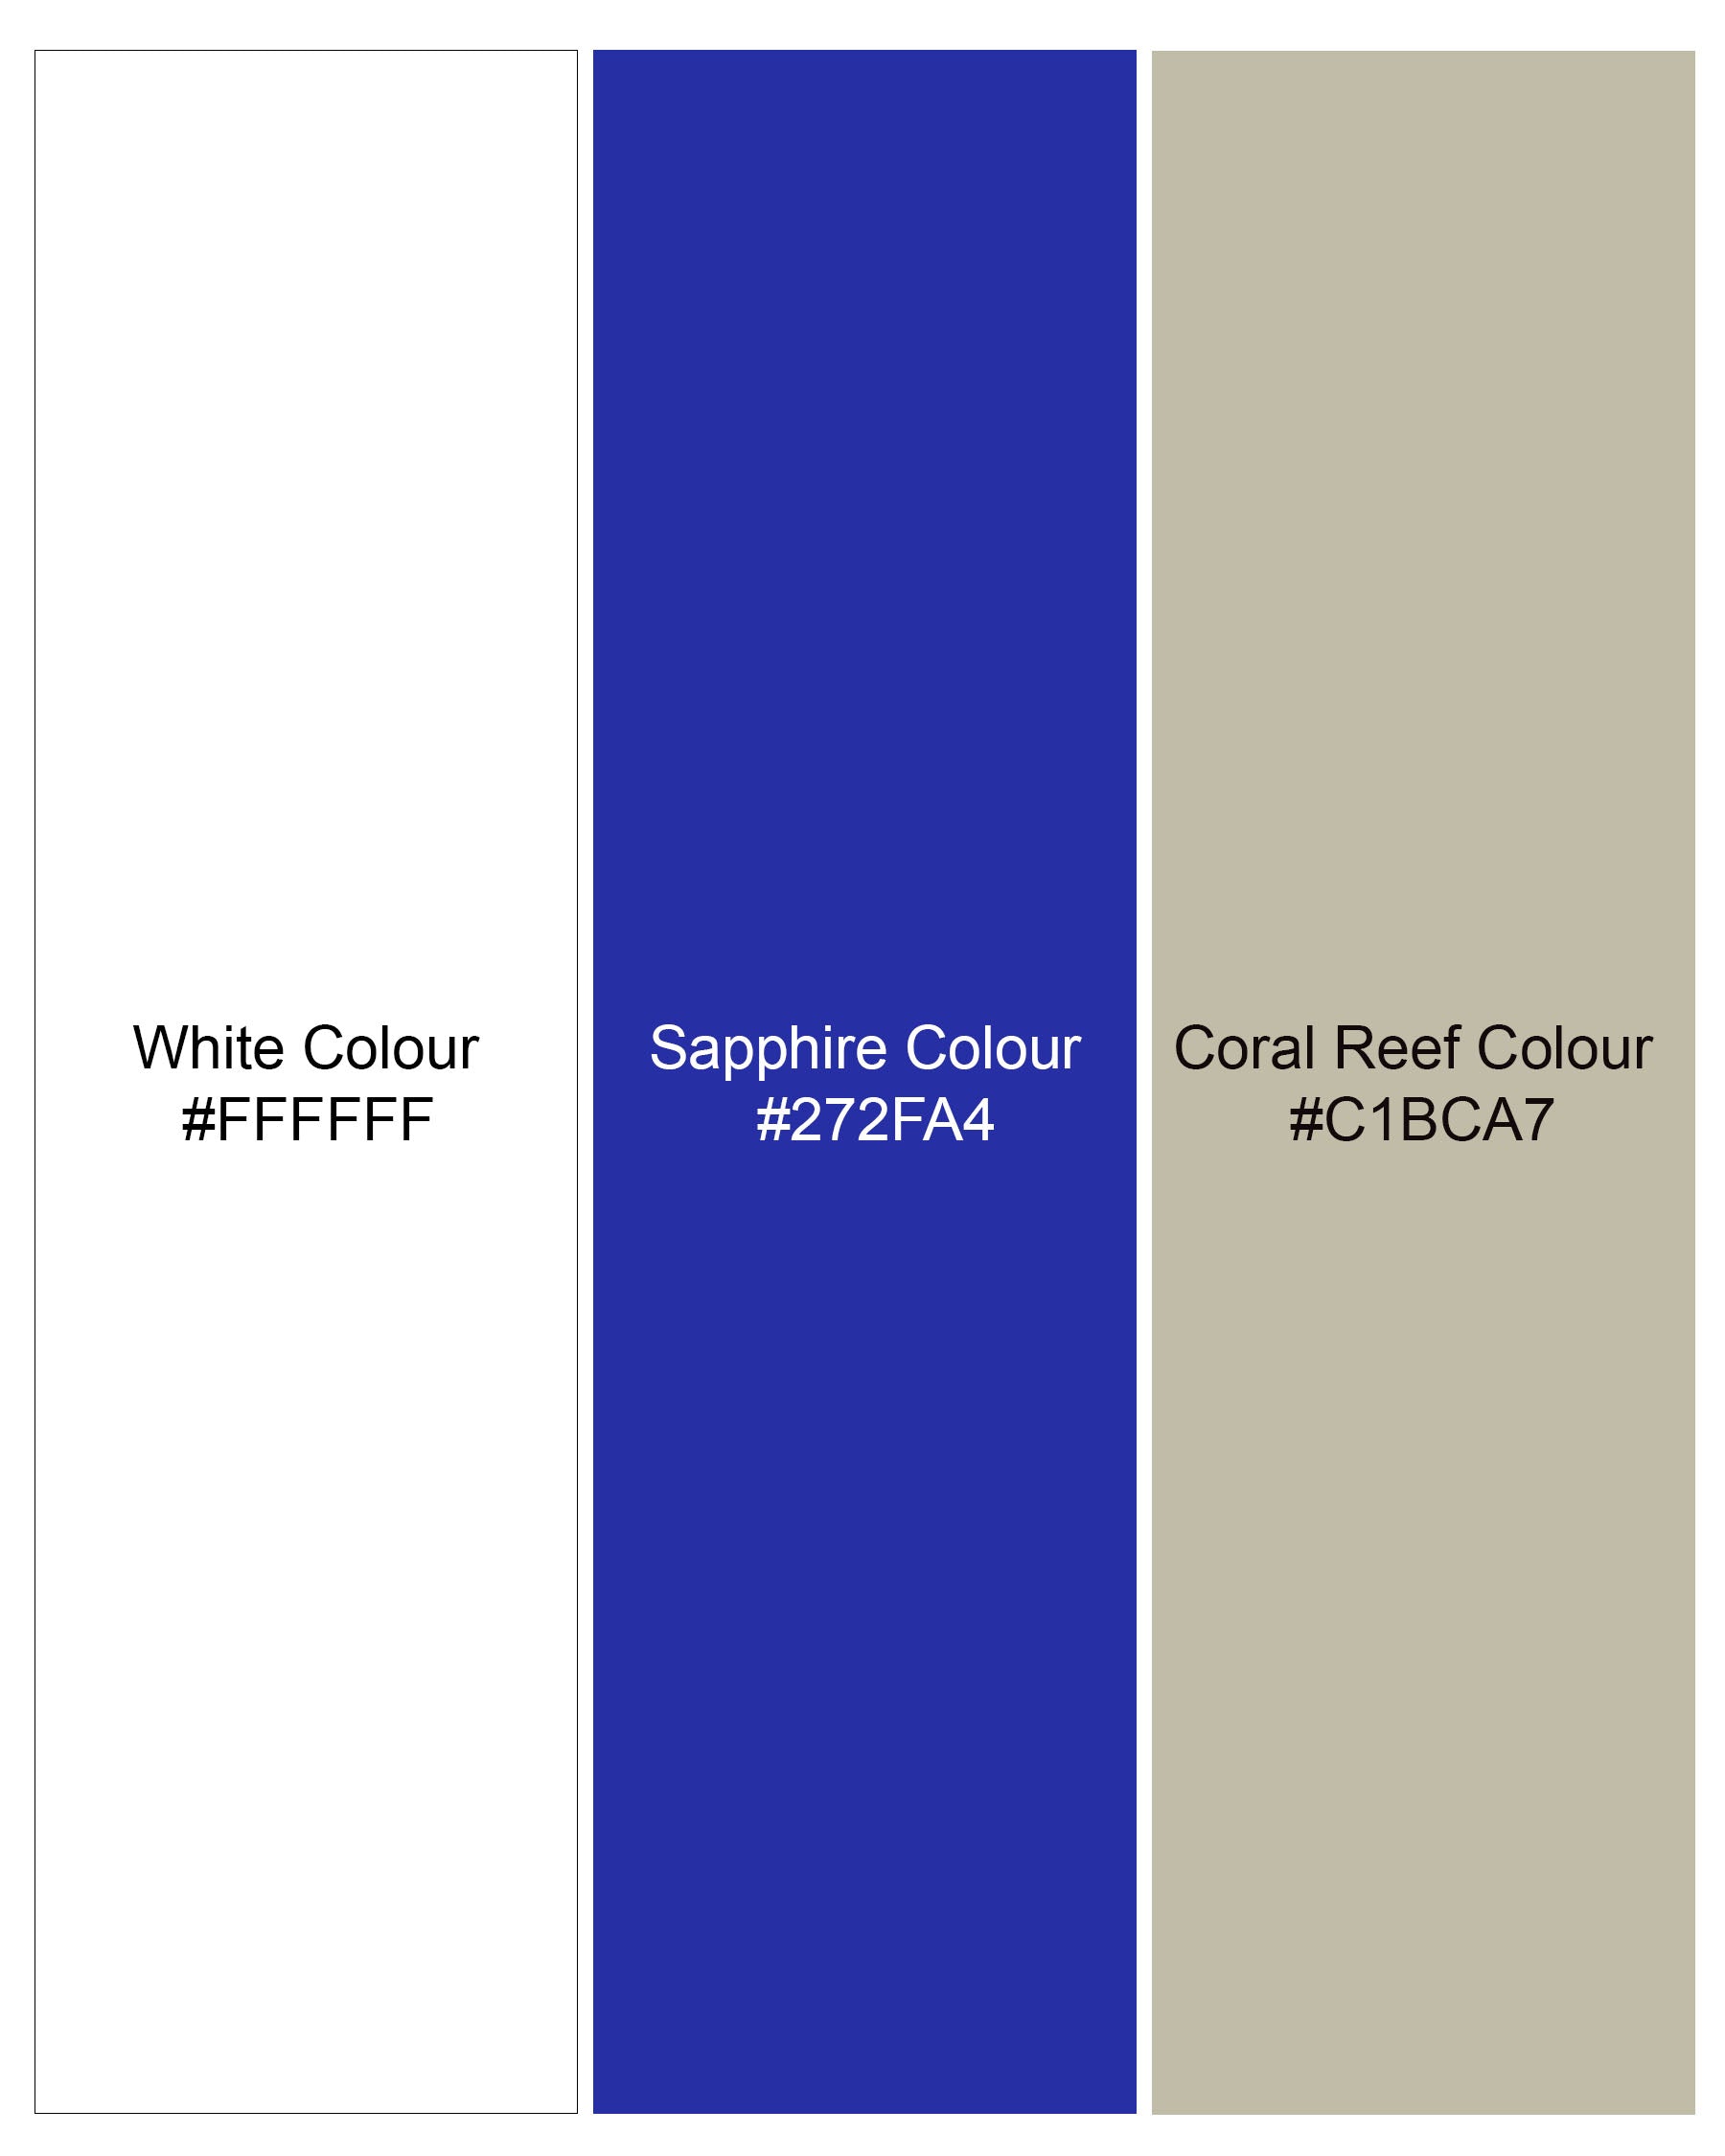 Coral Reef Brown with Sapphire Blue Argyle Printed Premium Cotton Designer Shirt 8204-P7 -38,8204-P7 -H-38,8204-P7 -39,8204-P7 -H-39,8204-P7 -40,8204-P7 -H-40,8204-P7 -42,8204-P7 -H-42,8204-P7 -44,8204-P7 -H-44,8204-P7 -46,8204-P7 -H-46,8204-P7 -48,8204-P7 -H-48,8204-P7 -50,8204-P7 -H-50,8204-P7 -52,8204-P7 -H-52